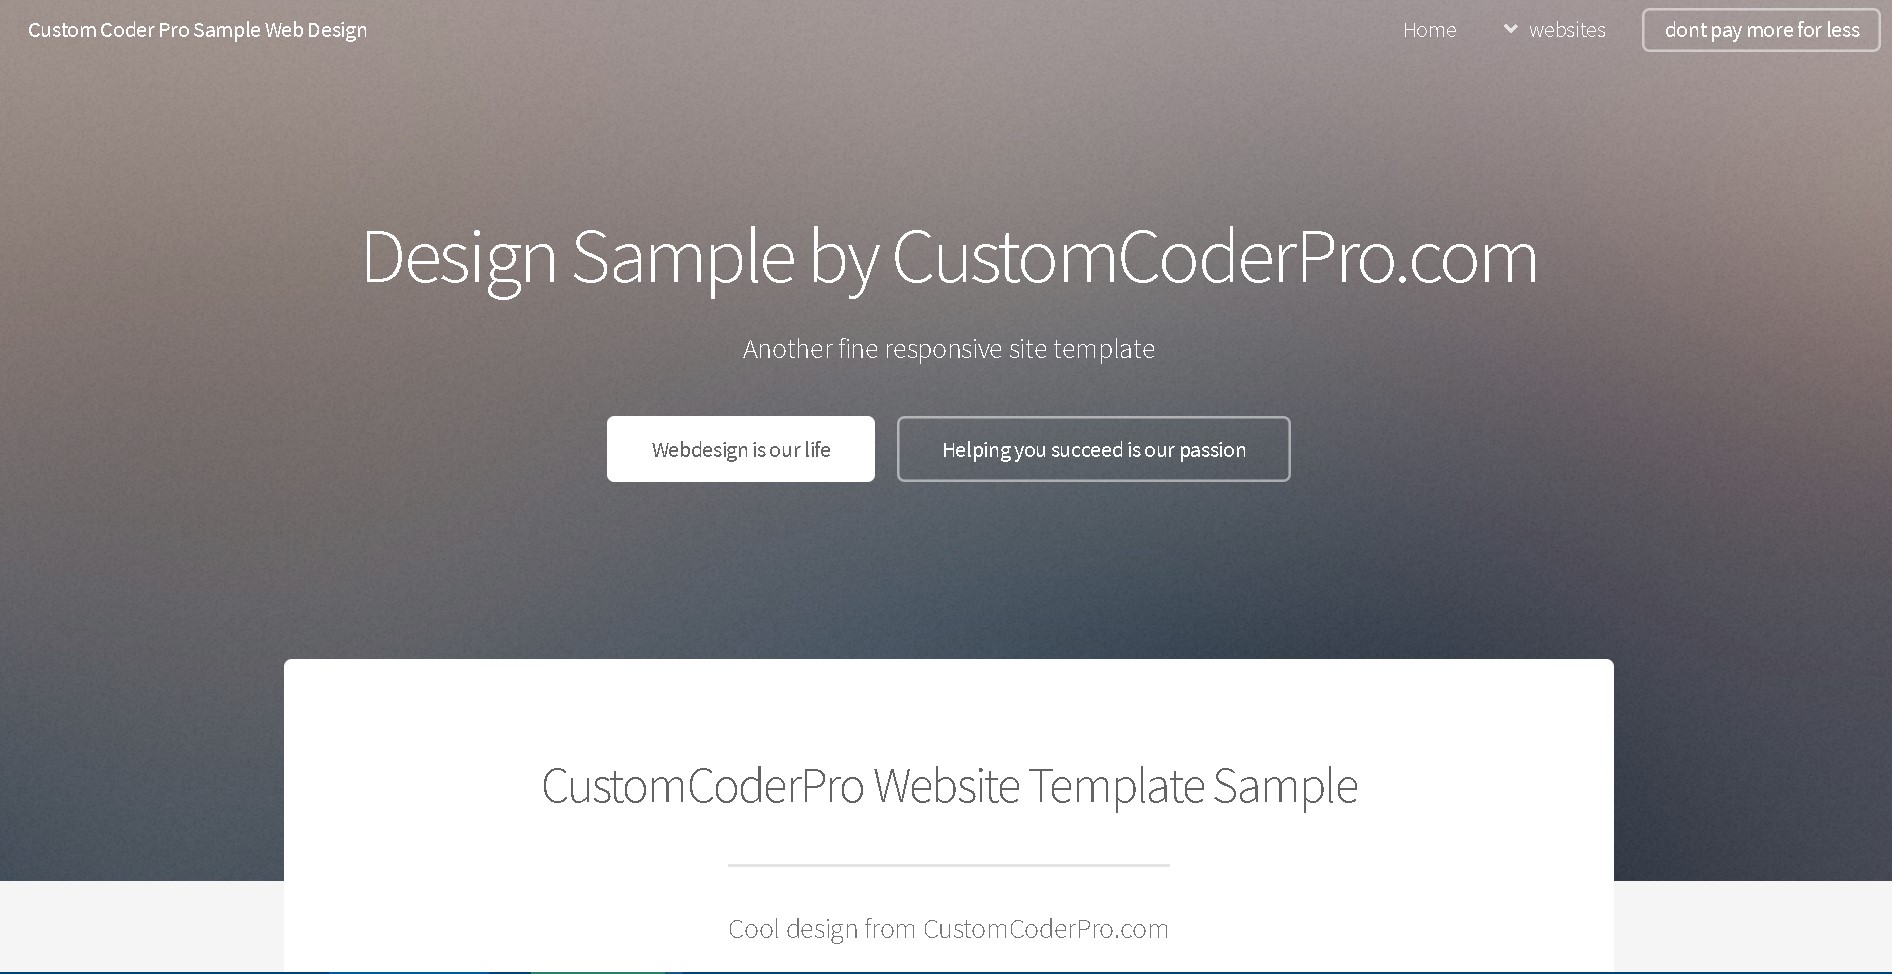 Cusom Coder Pro Webdesign Sample